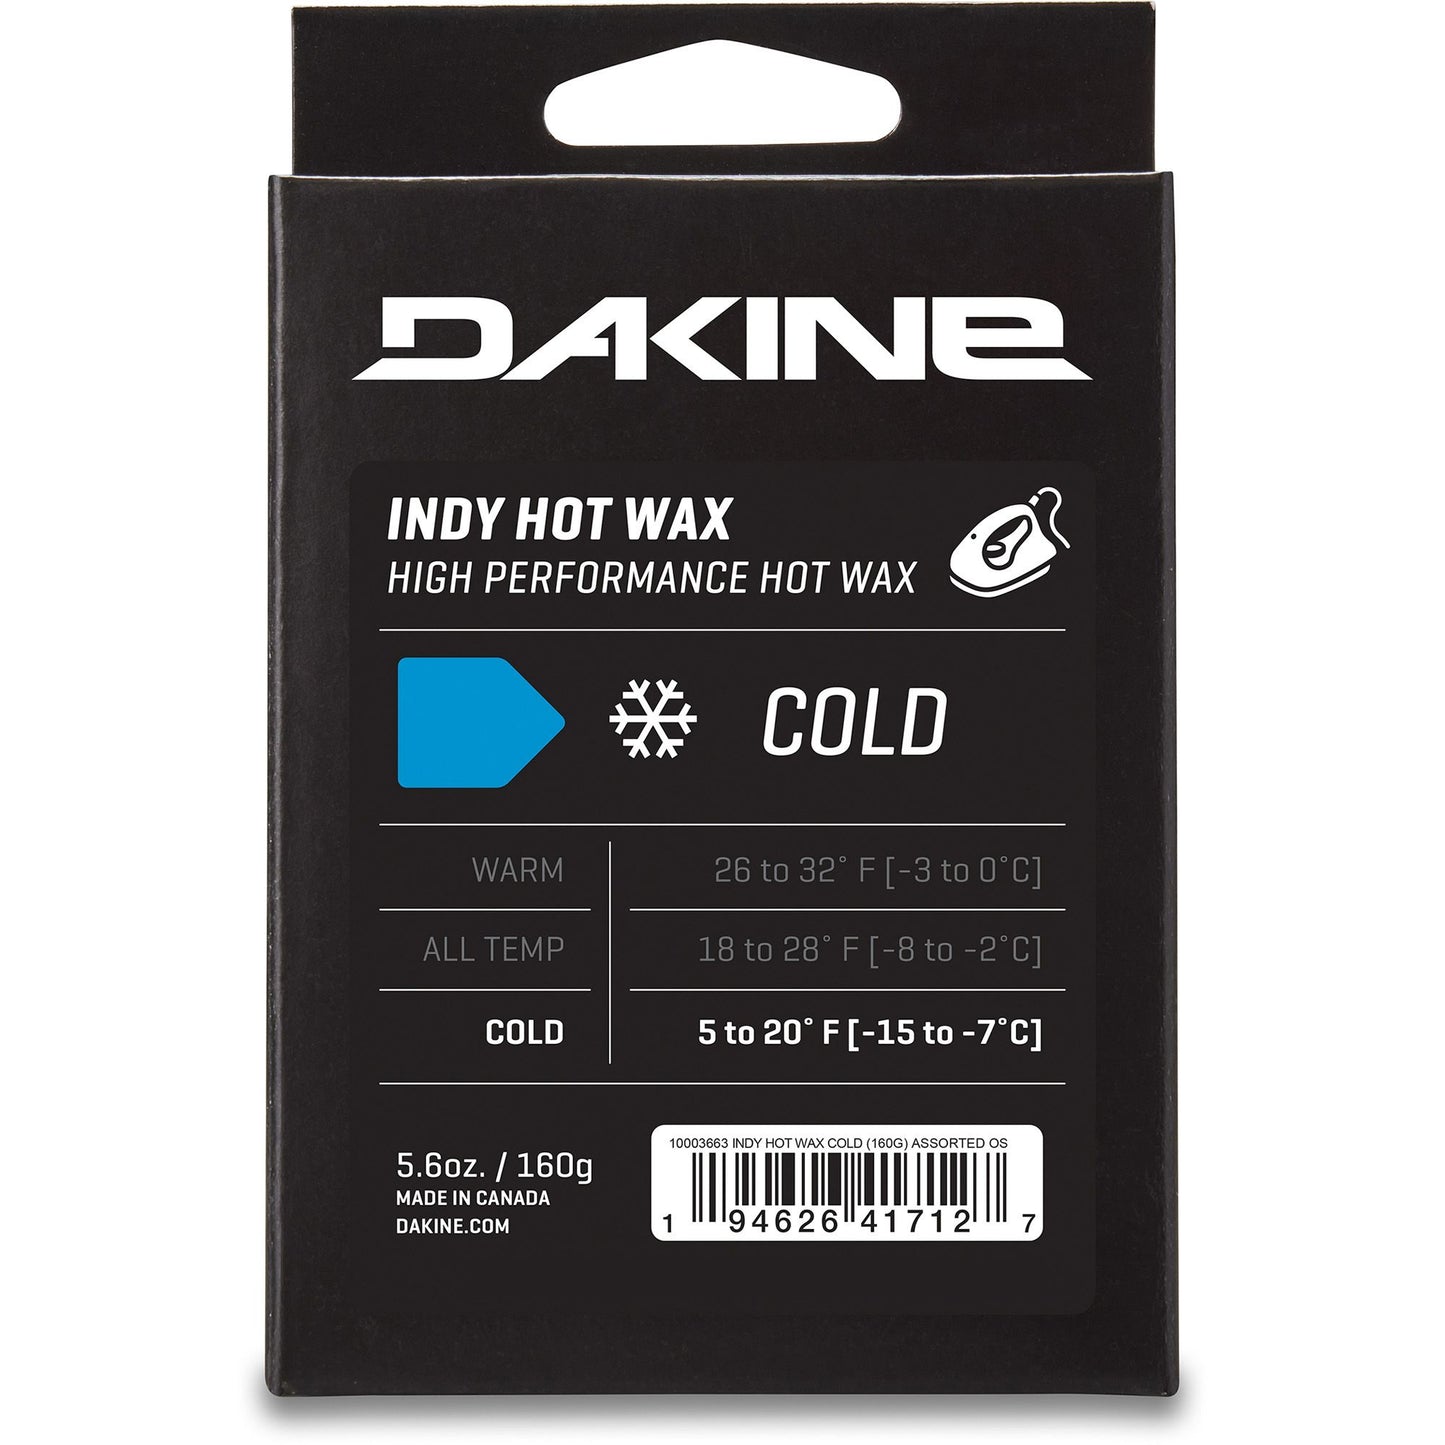 Dakine Indy Hot Wax Cold 160g Multicolor OS Wax